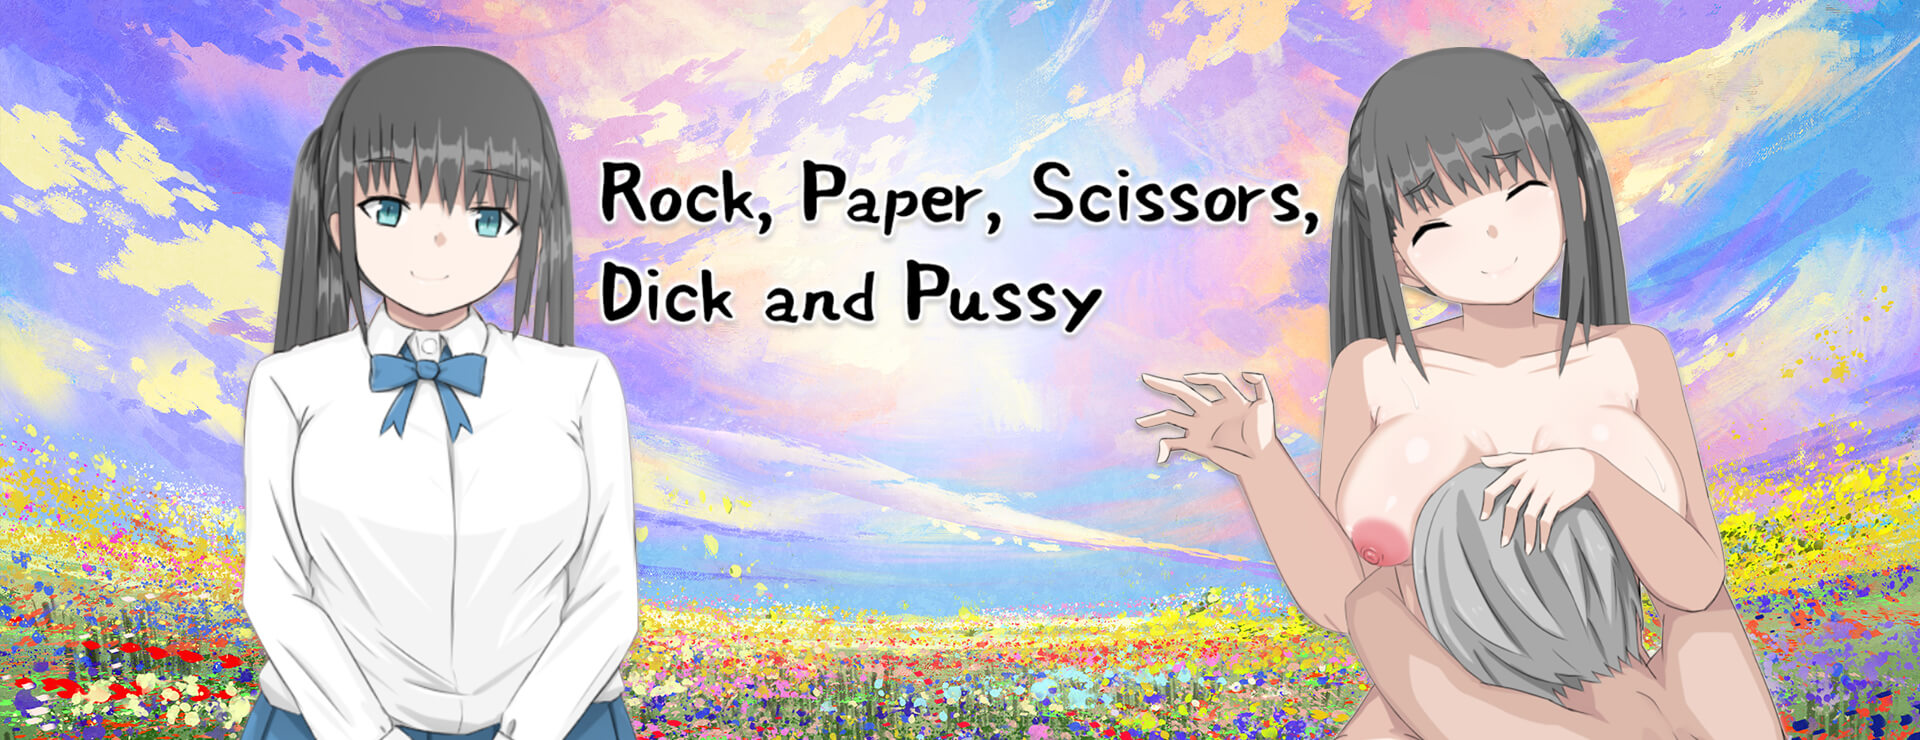 Rock, Paper, Scissors, Dick and Pussy - Casual Jeu